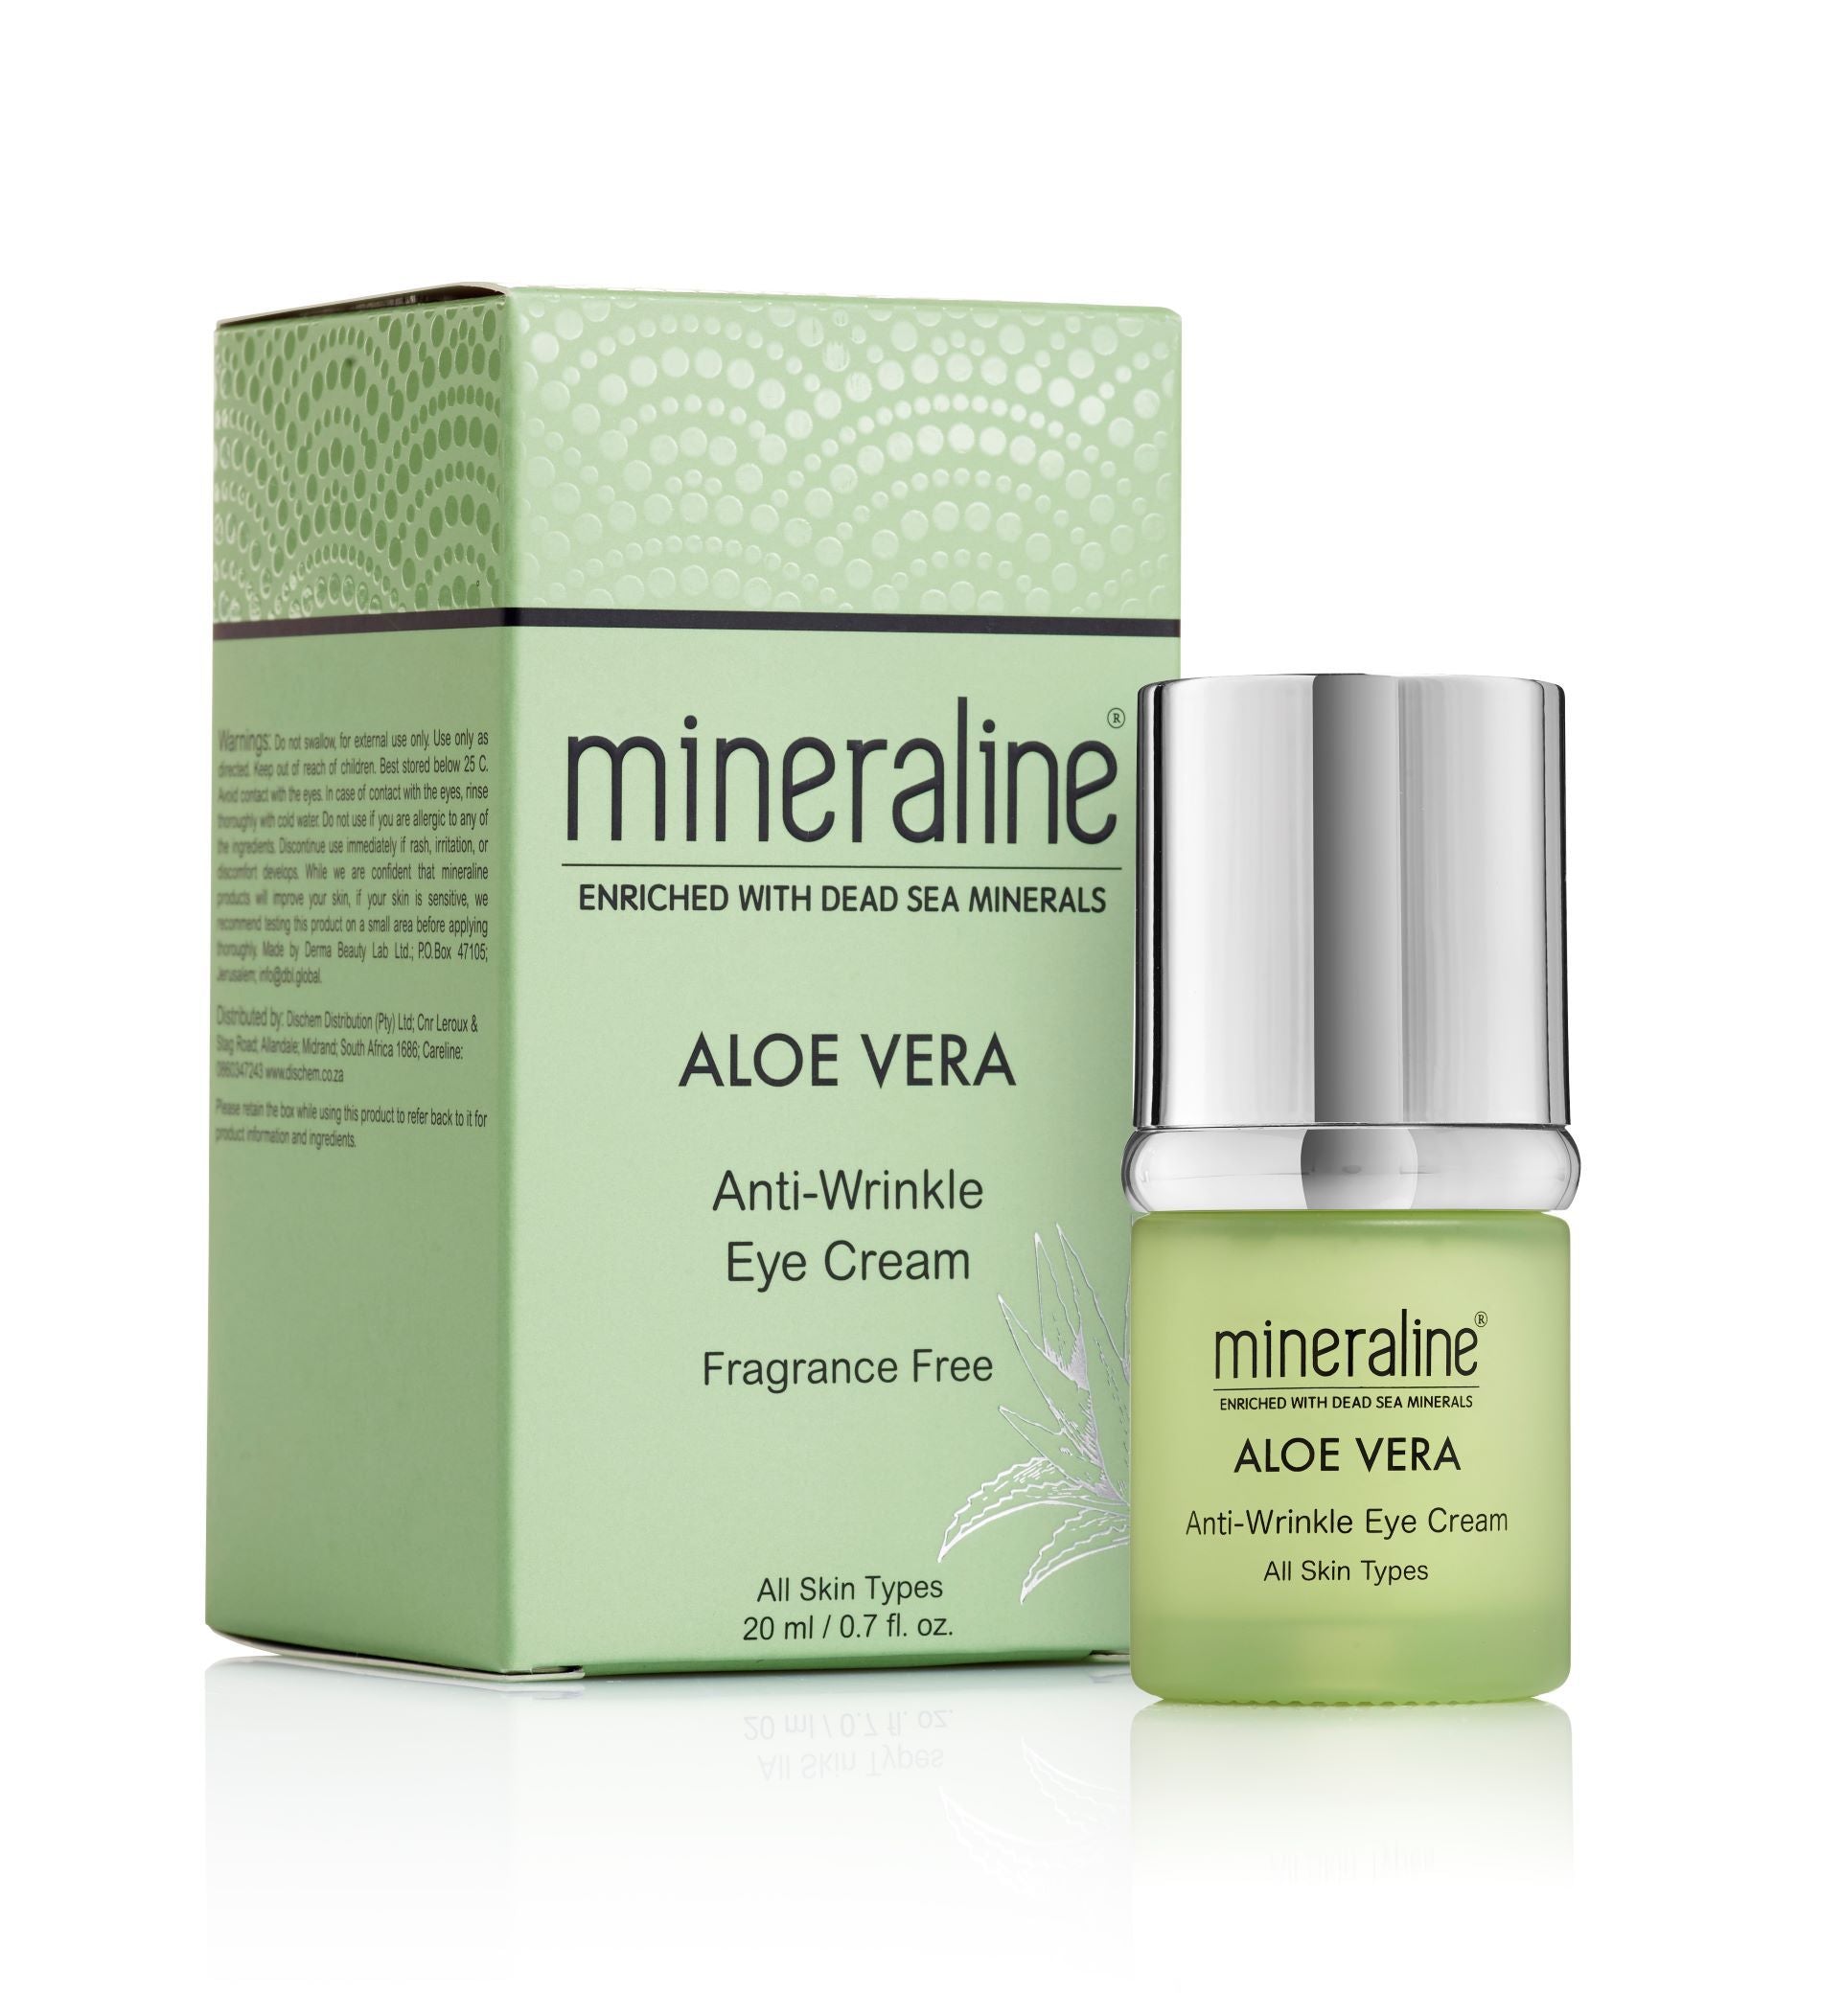 mineraline - Aloe Vera Anti-Wrinkle Eye Cream - Aloe Vera & Dead Sea minerals